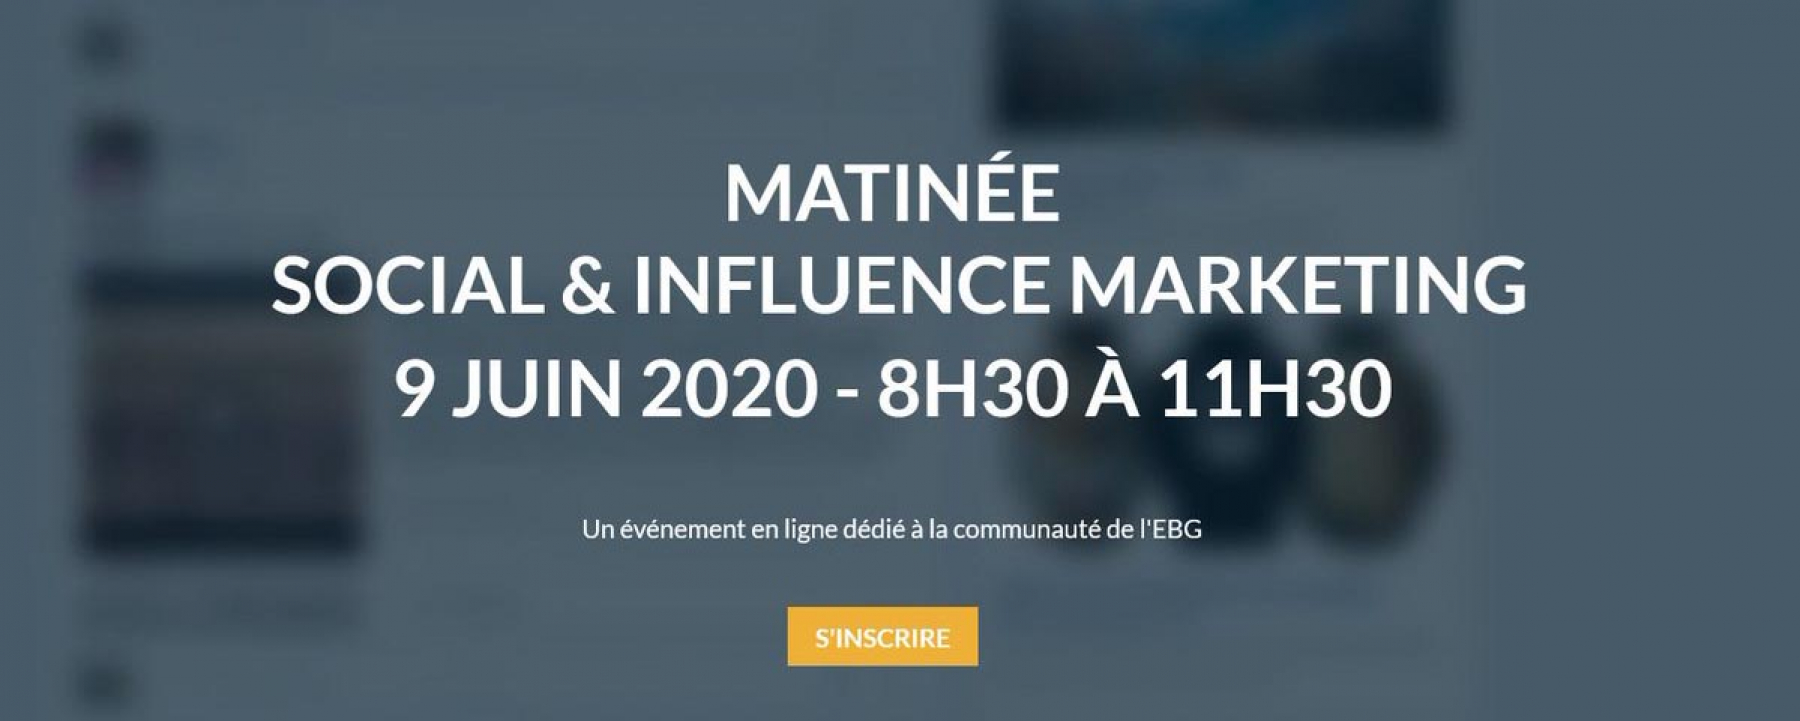 Webinar Matinée Social & Influence Marketing, le 9 juin 2020, organisé par EBG